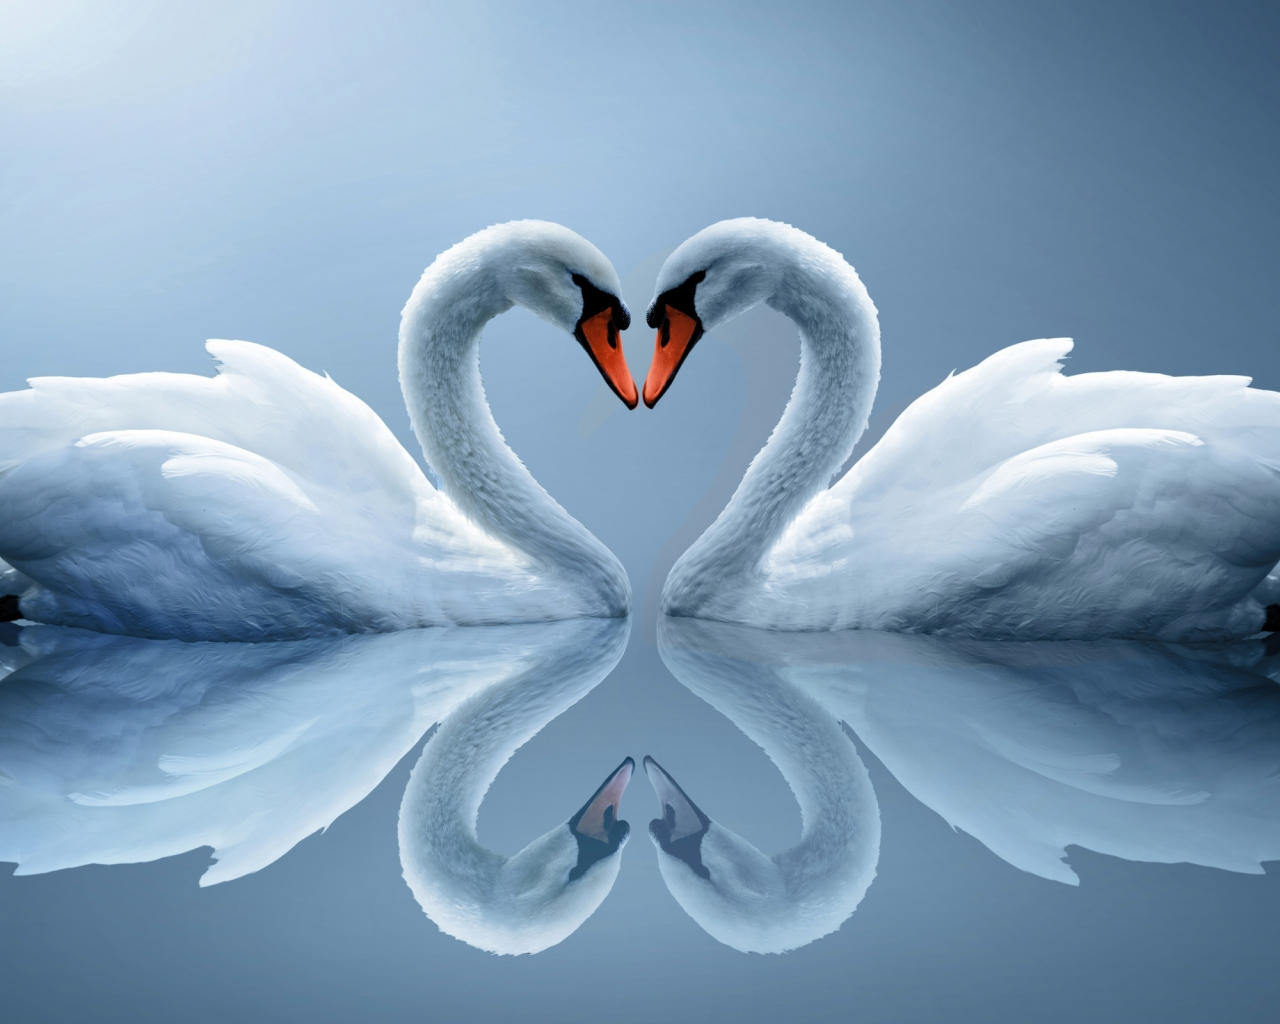 белые лебеди, отражение, пара, сердце